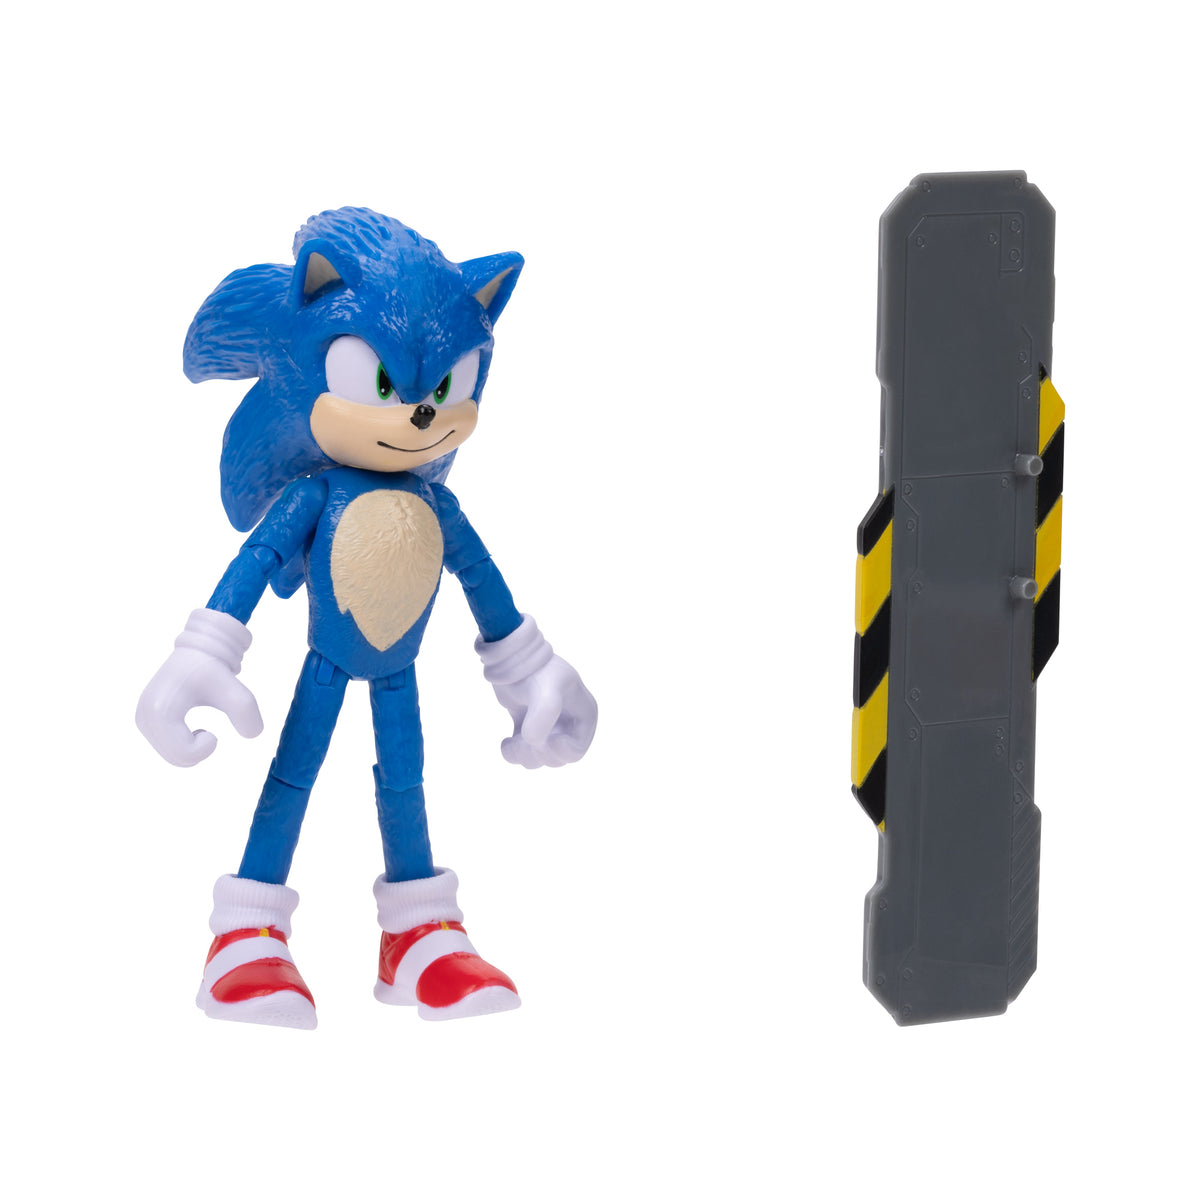 Updated Sonic Boom Sonic the Hedgehog Minifigure